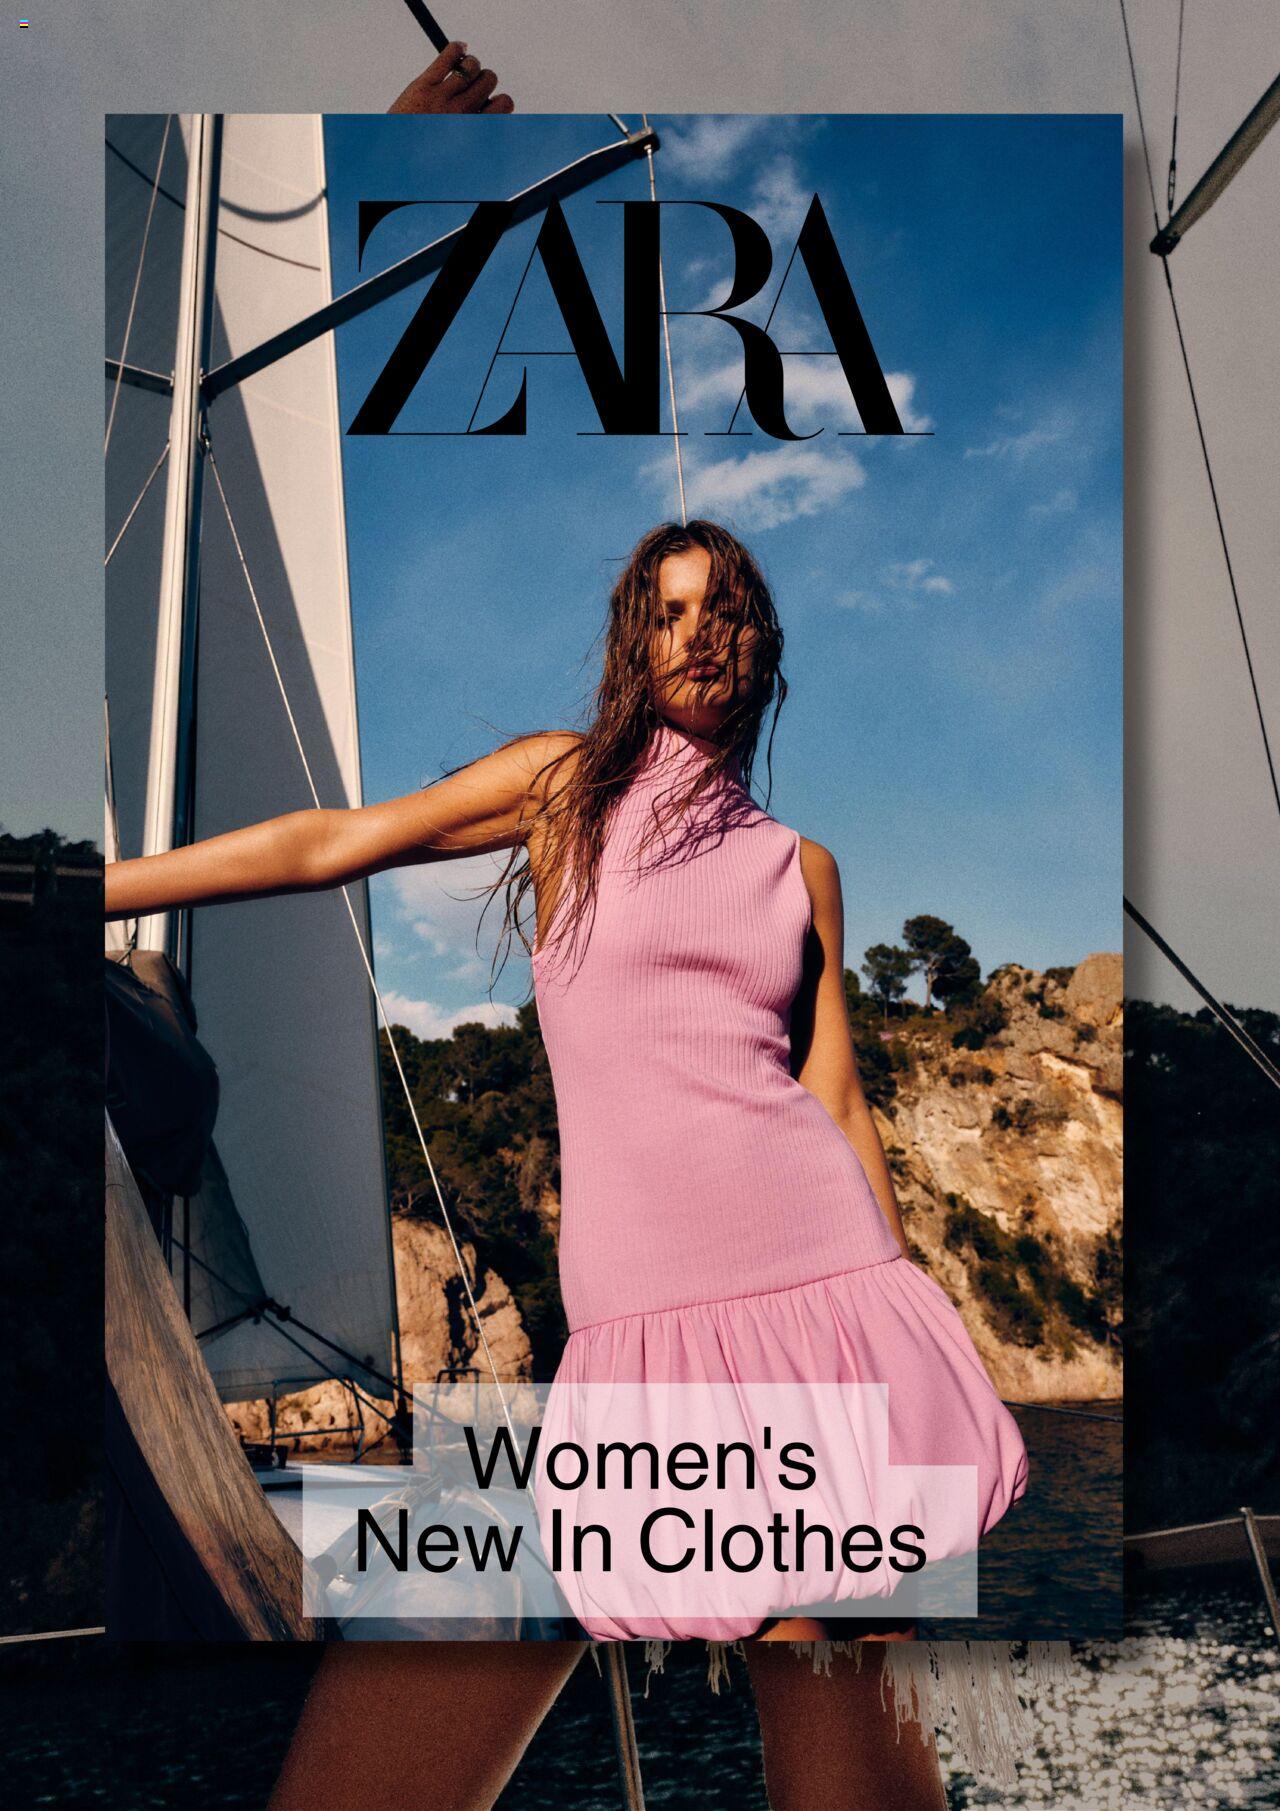 Zara - New Women's Clothes Lookbook - Page 1